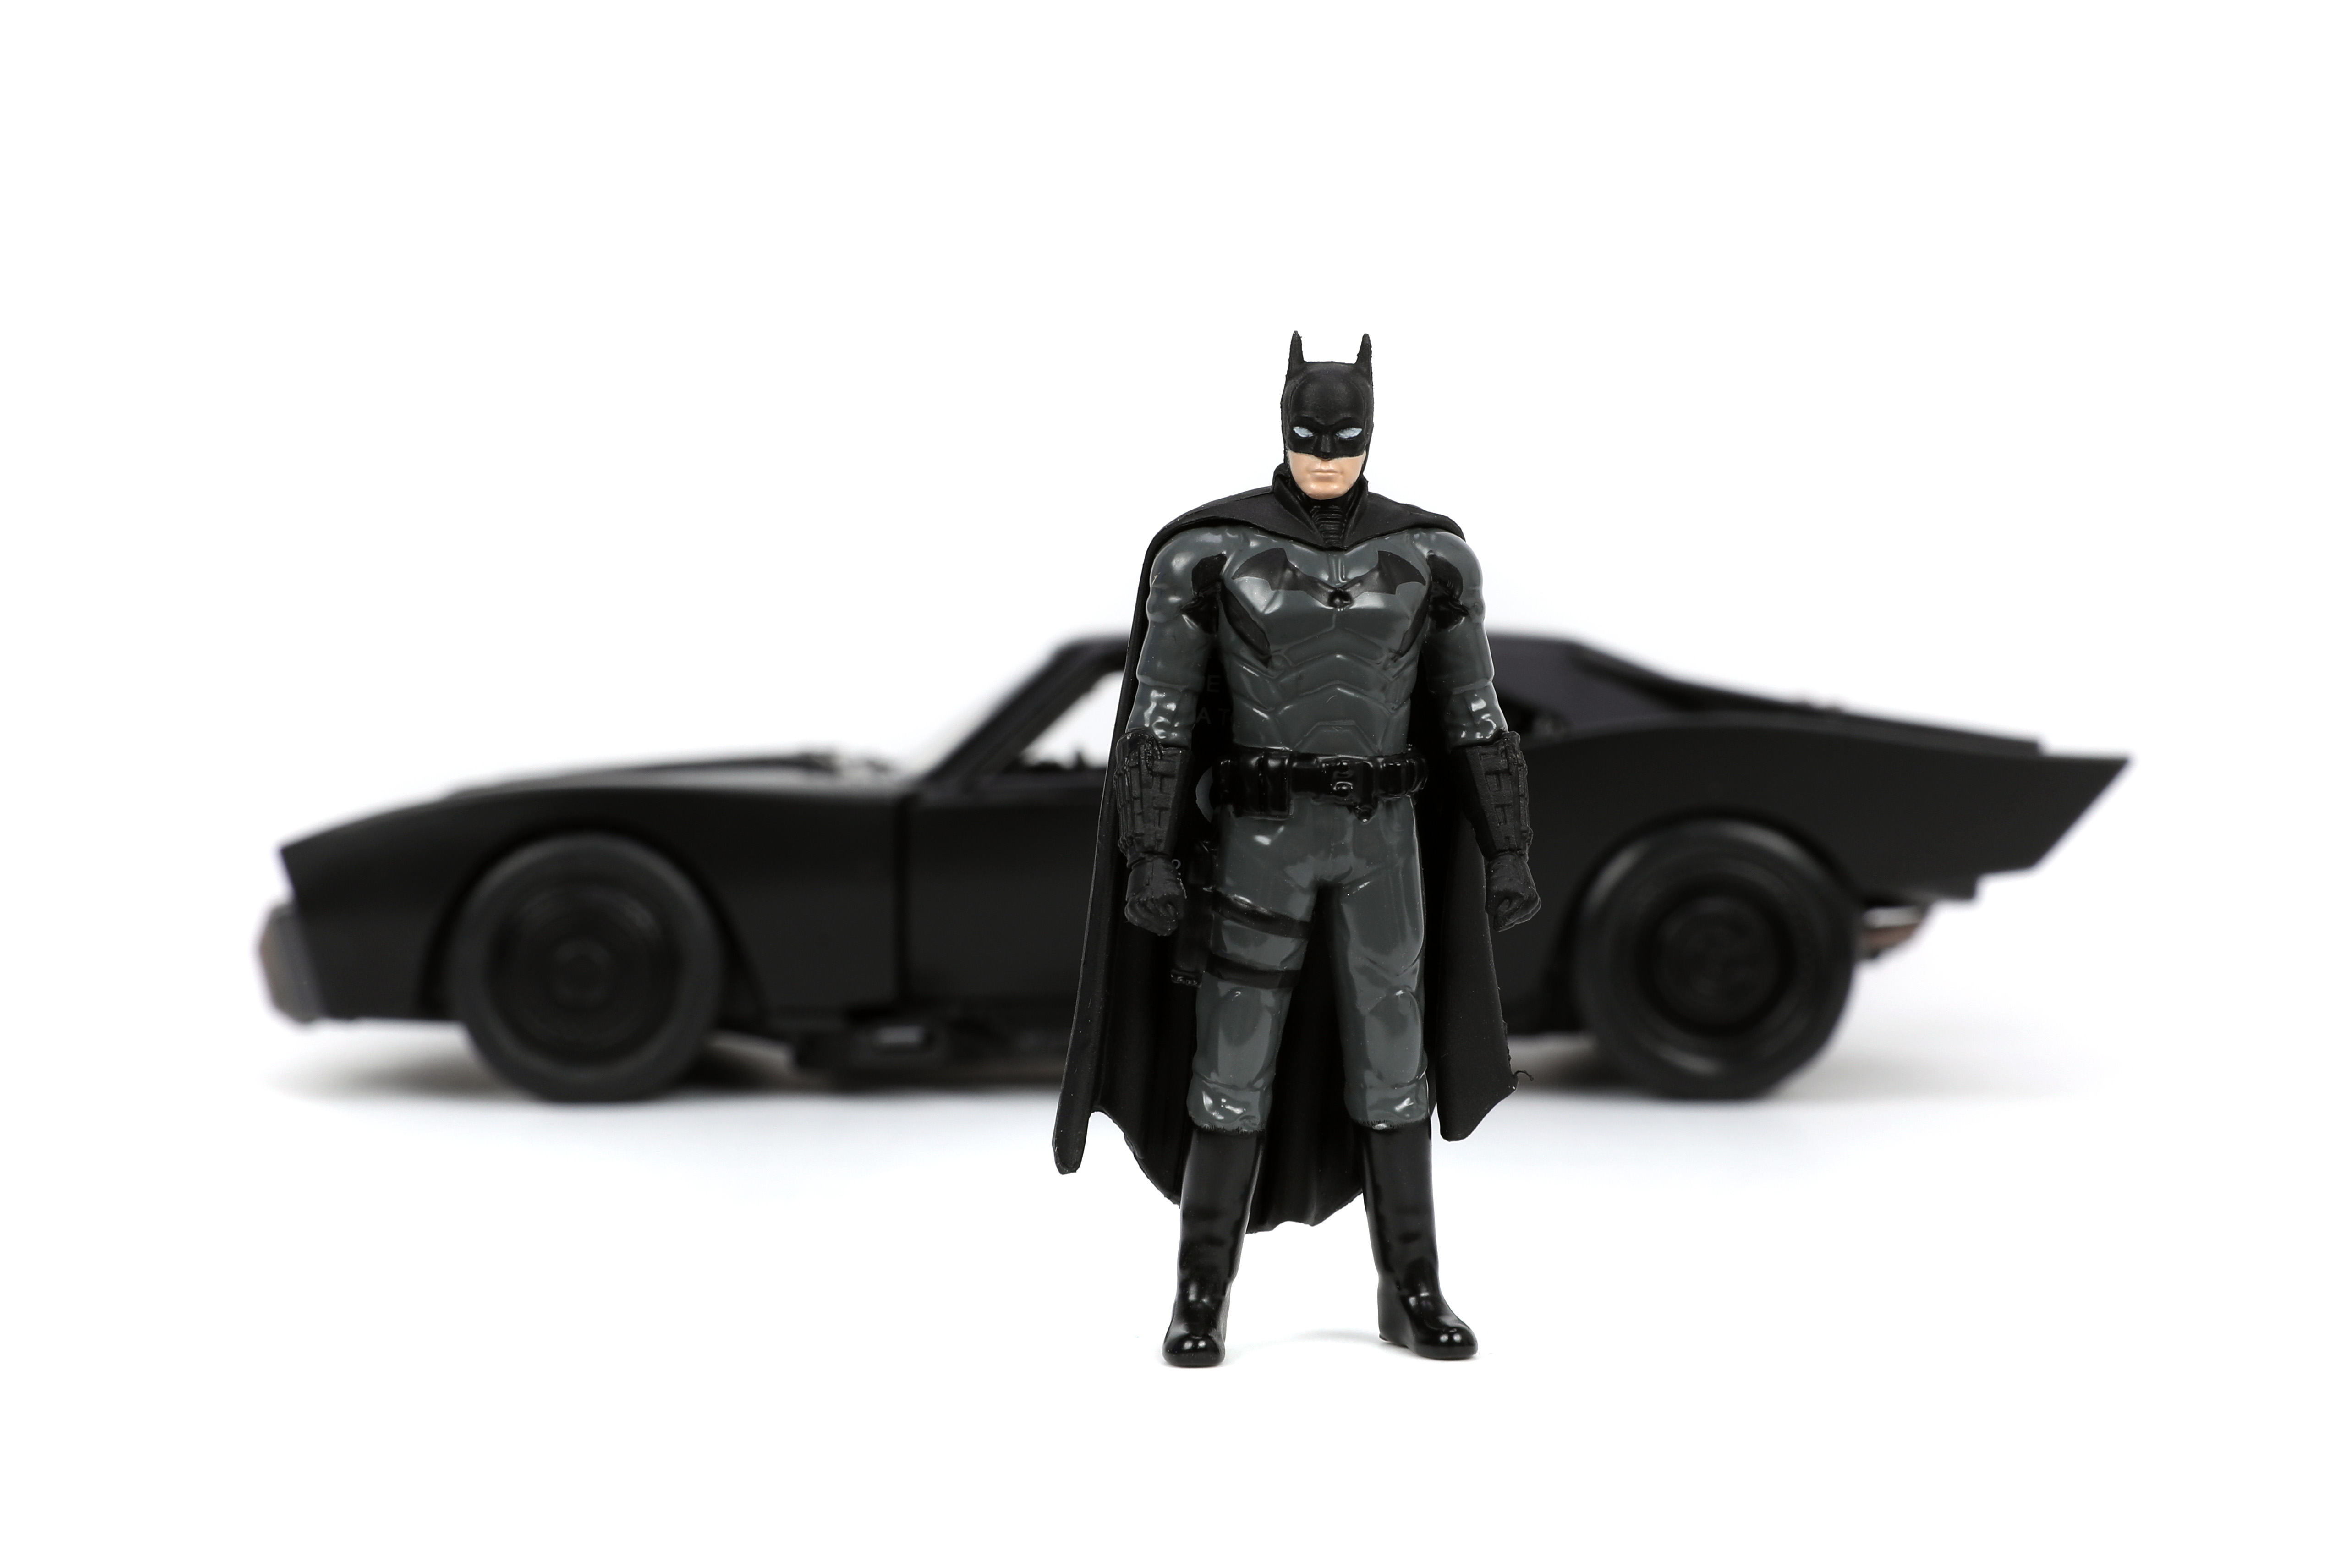  - Jadatoys 253215010 Batman & Batmobile 1:24 mit Batman  Figur Modellauto